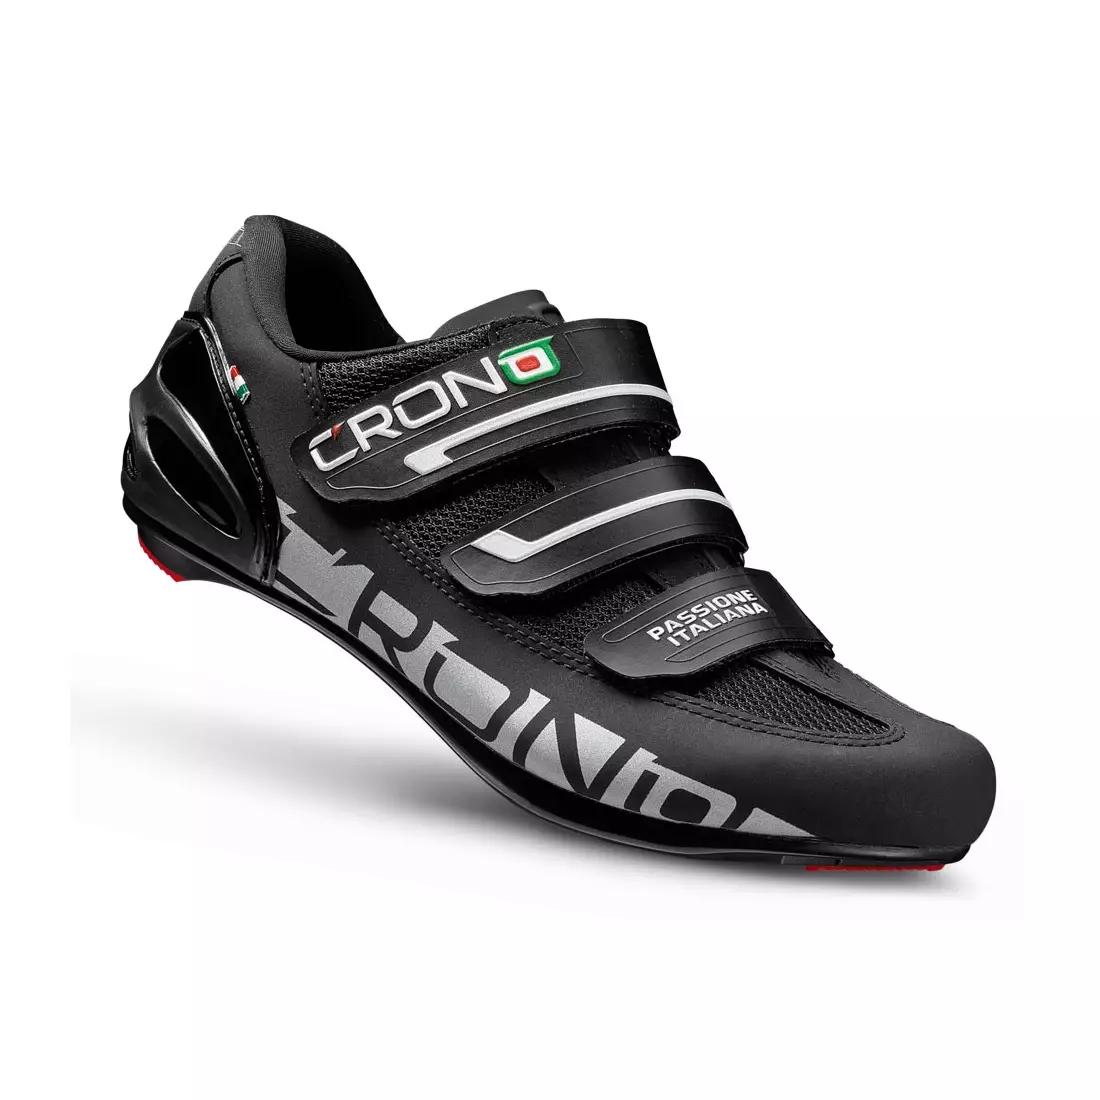 CRONO PERLA NYLON - Rennradschuhe - Farbe: Schwarz